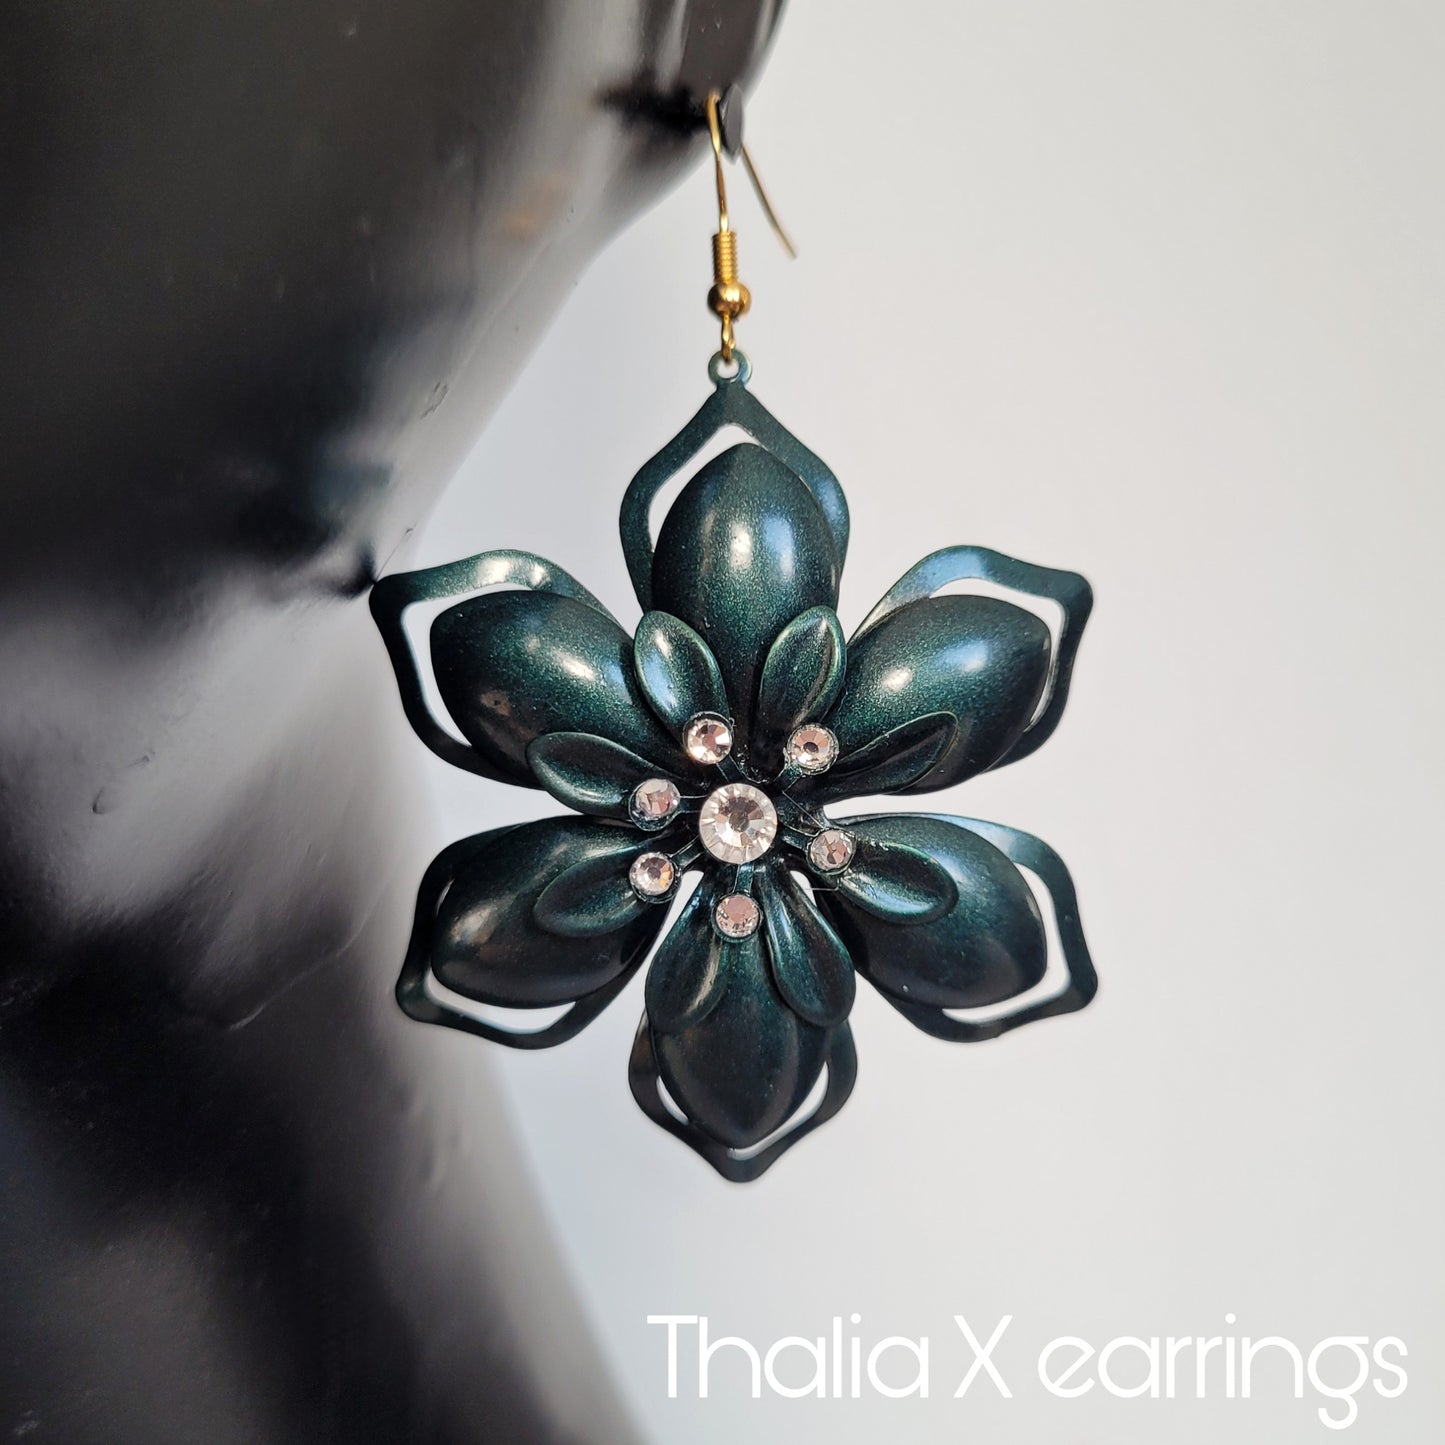 Deusa ex Machina collection: The Thalia earrings